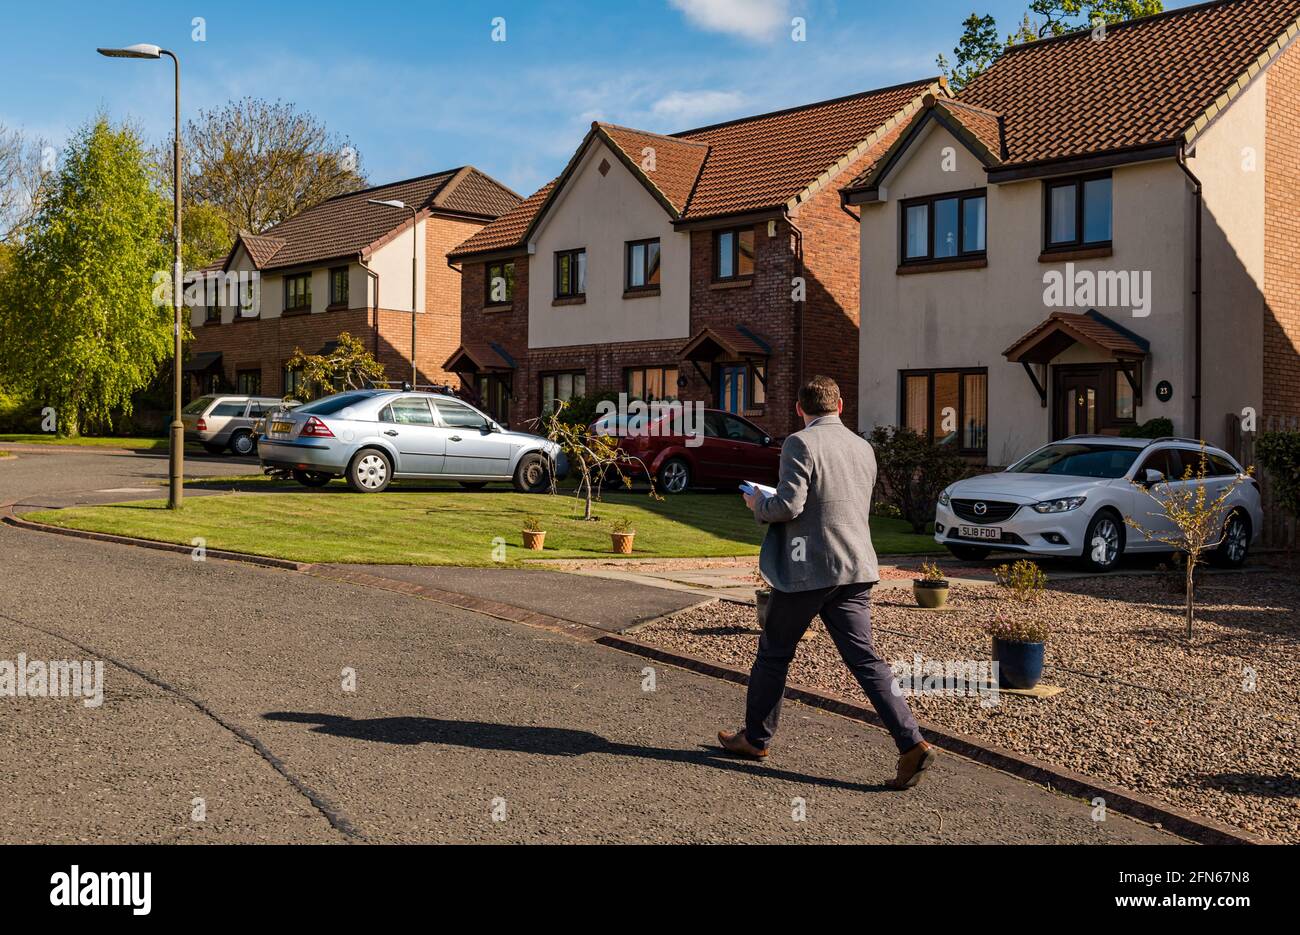 Douglas Ross, Scottish Conservative party leader, delivers 2021 election leaflets in a housing estate, Haddington, East Lothian, Scotland, UK Stock Photo